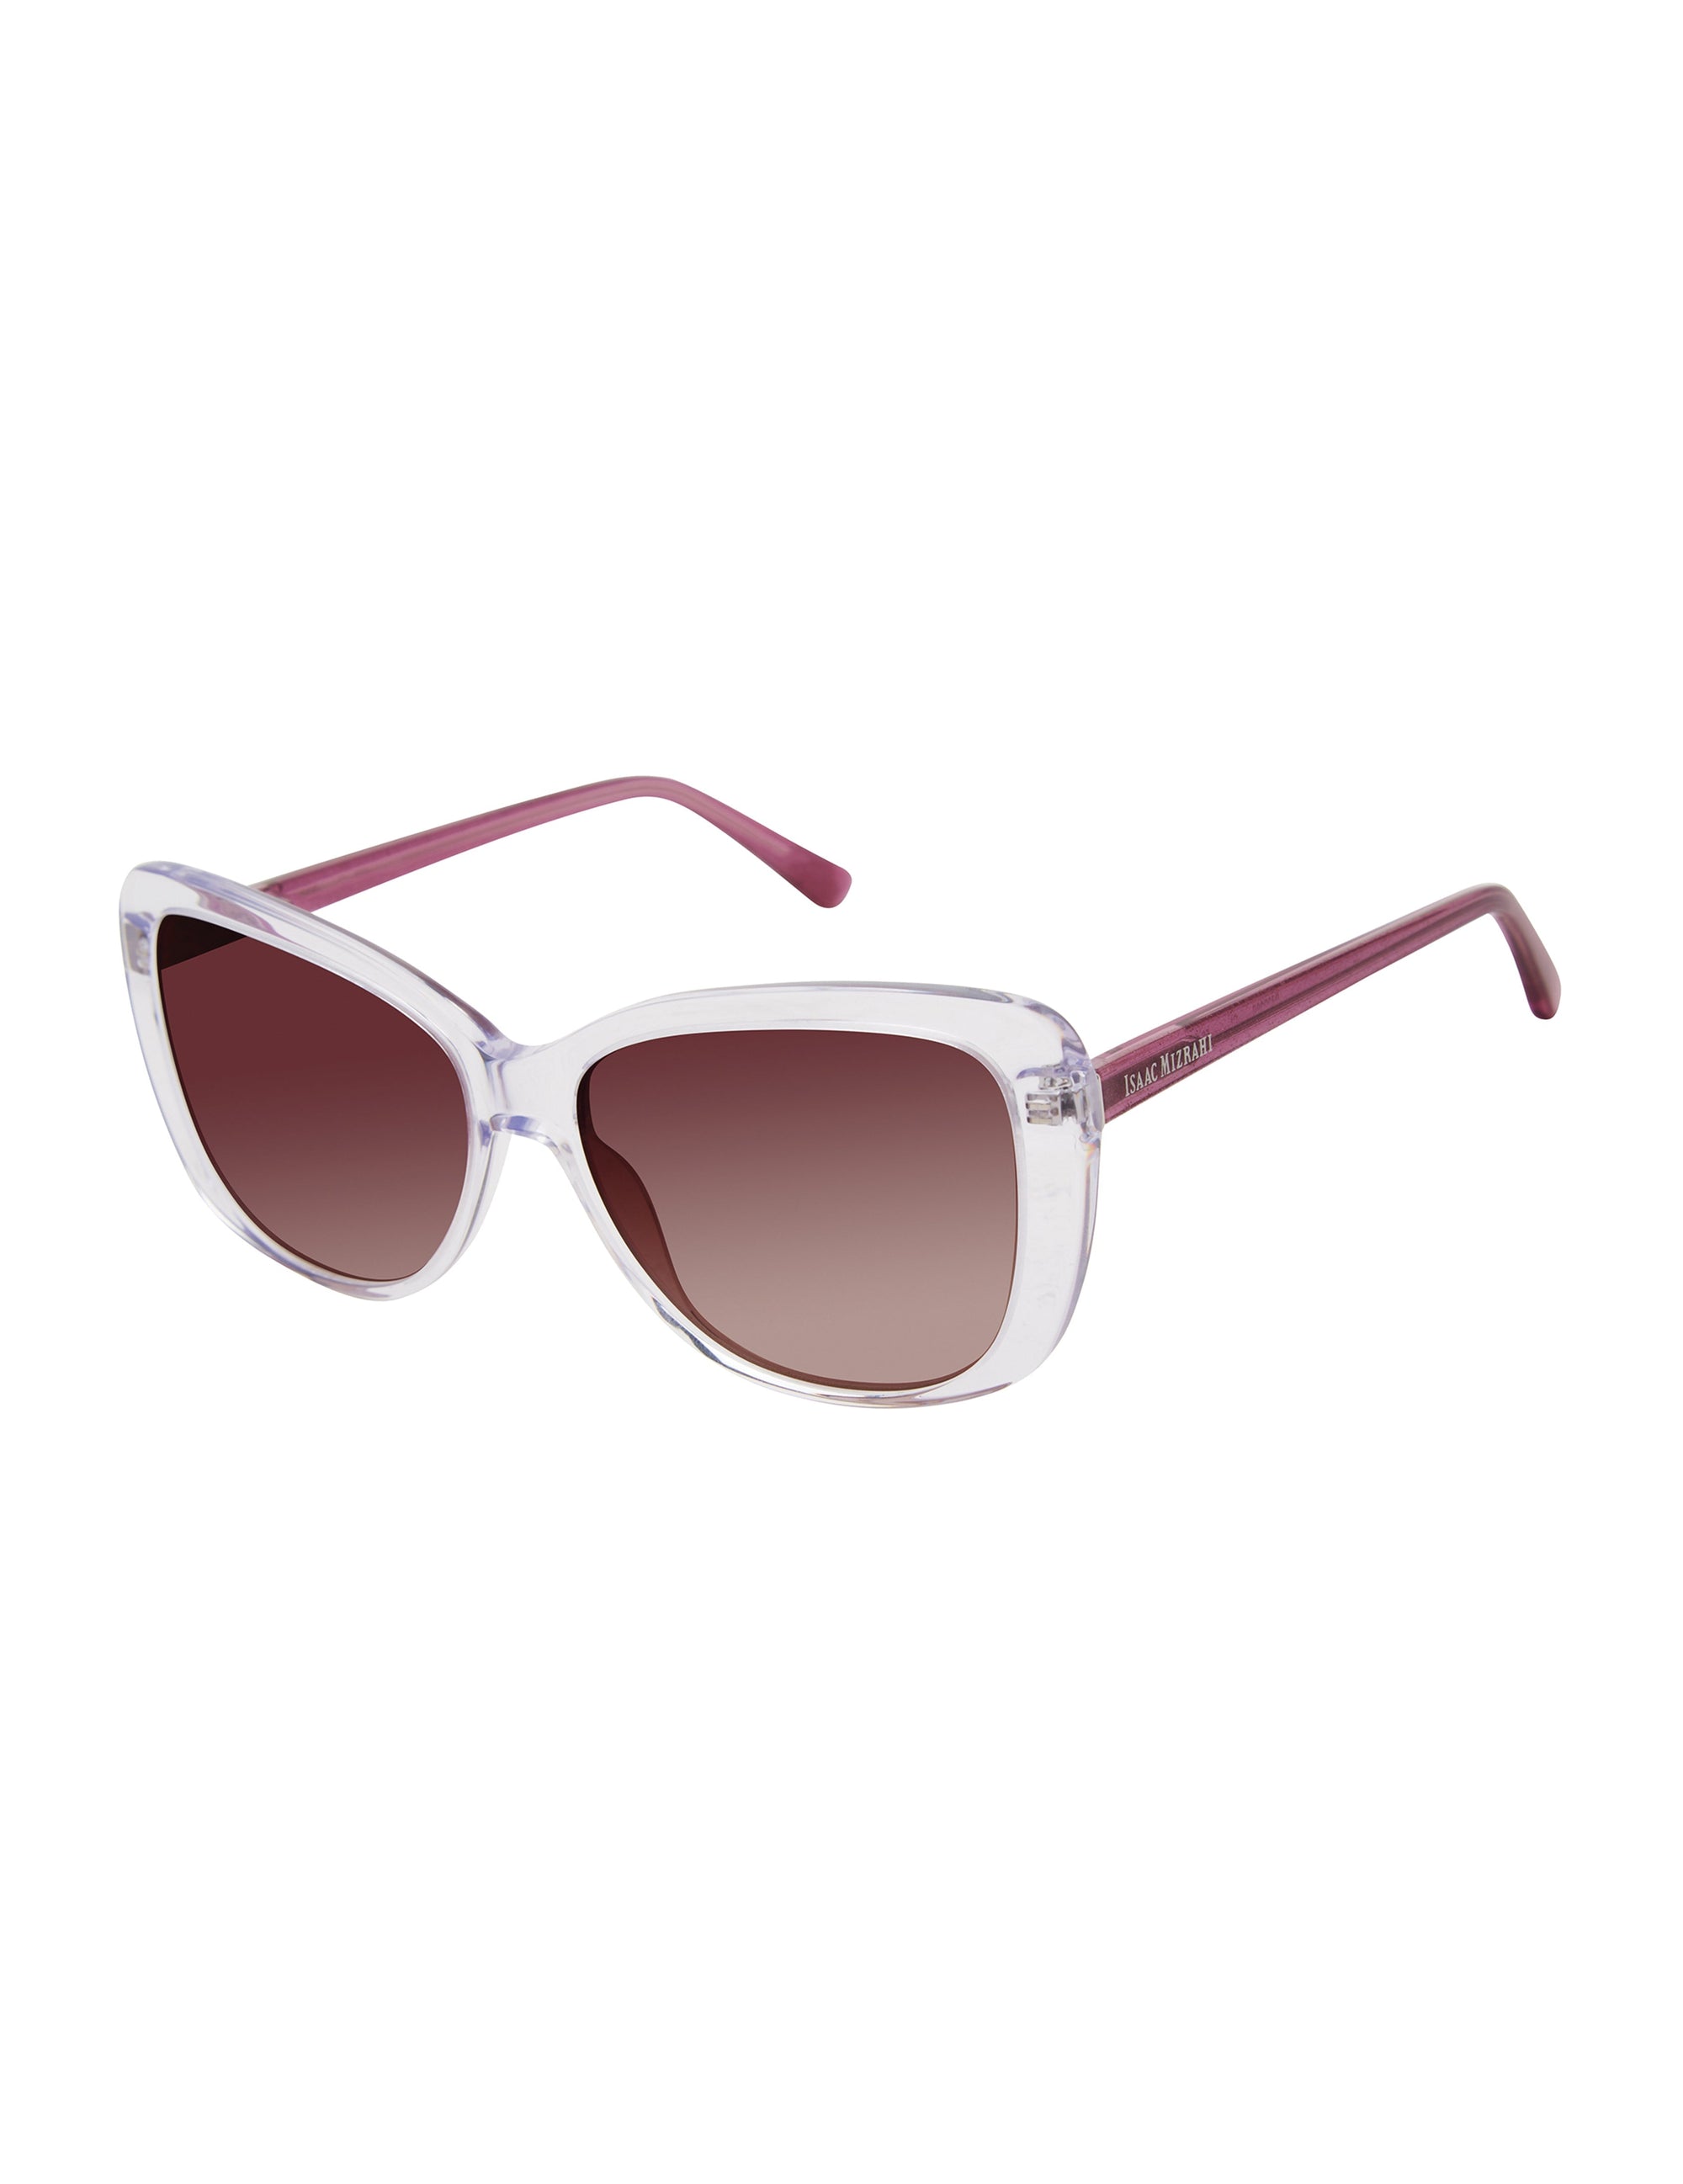 Clear Acetate Cat-Eye Geometric Mirrored Sunglasses with Gold Sunwear  Lenses - 1495 | Flash mirror sunglasses, Mirrored sunglasses, Sunglasses